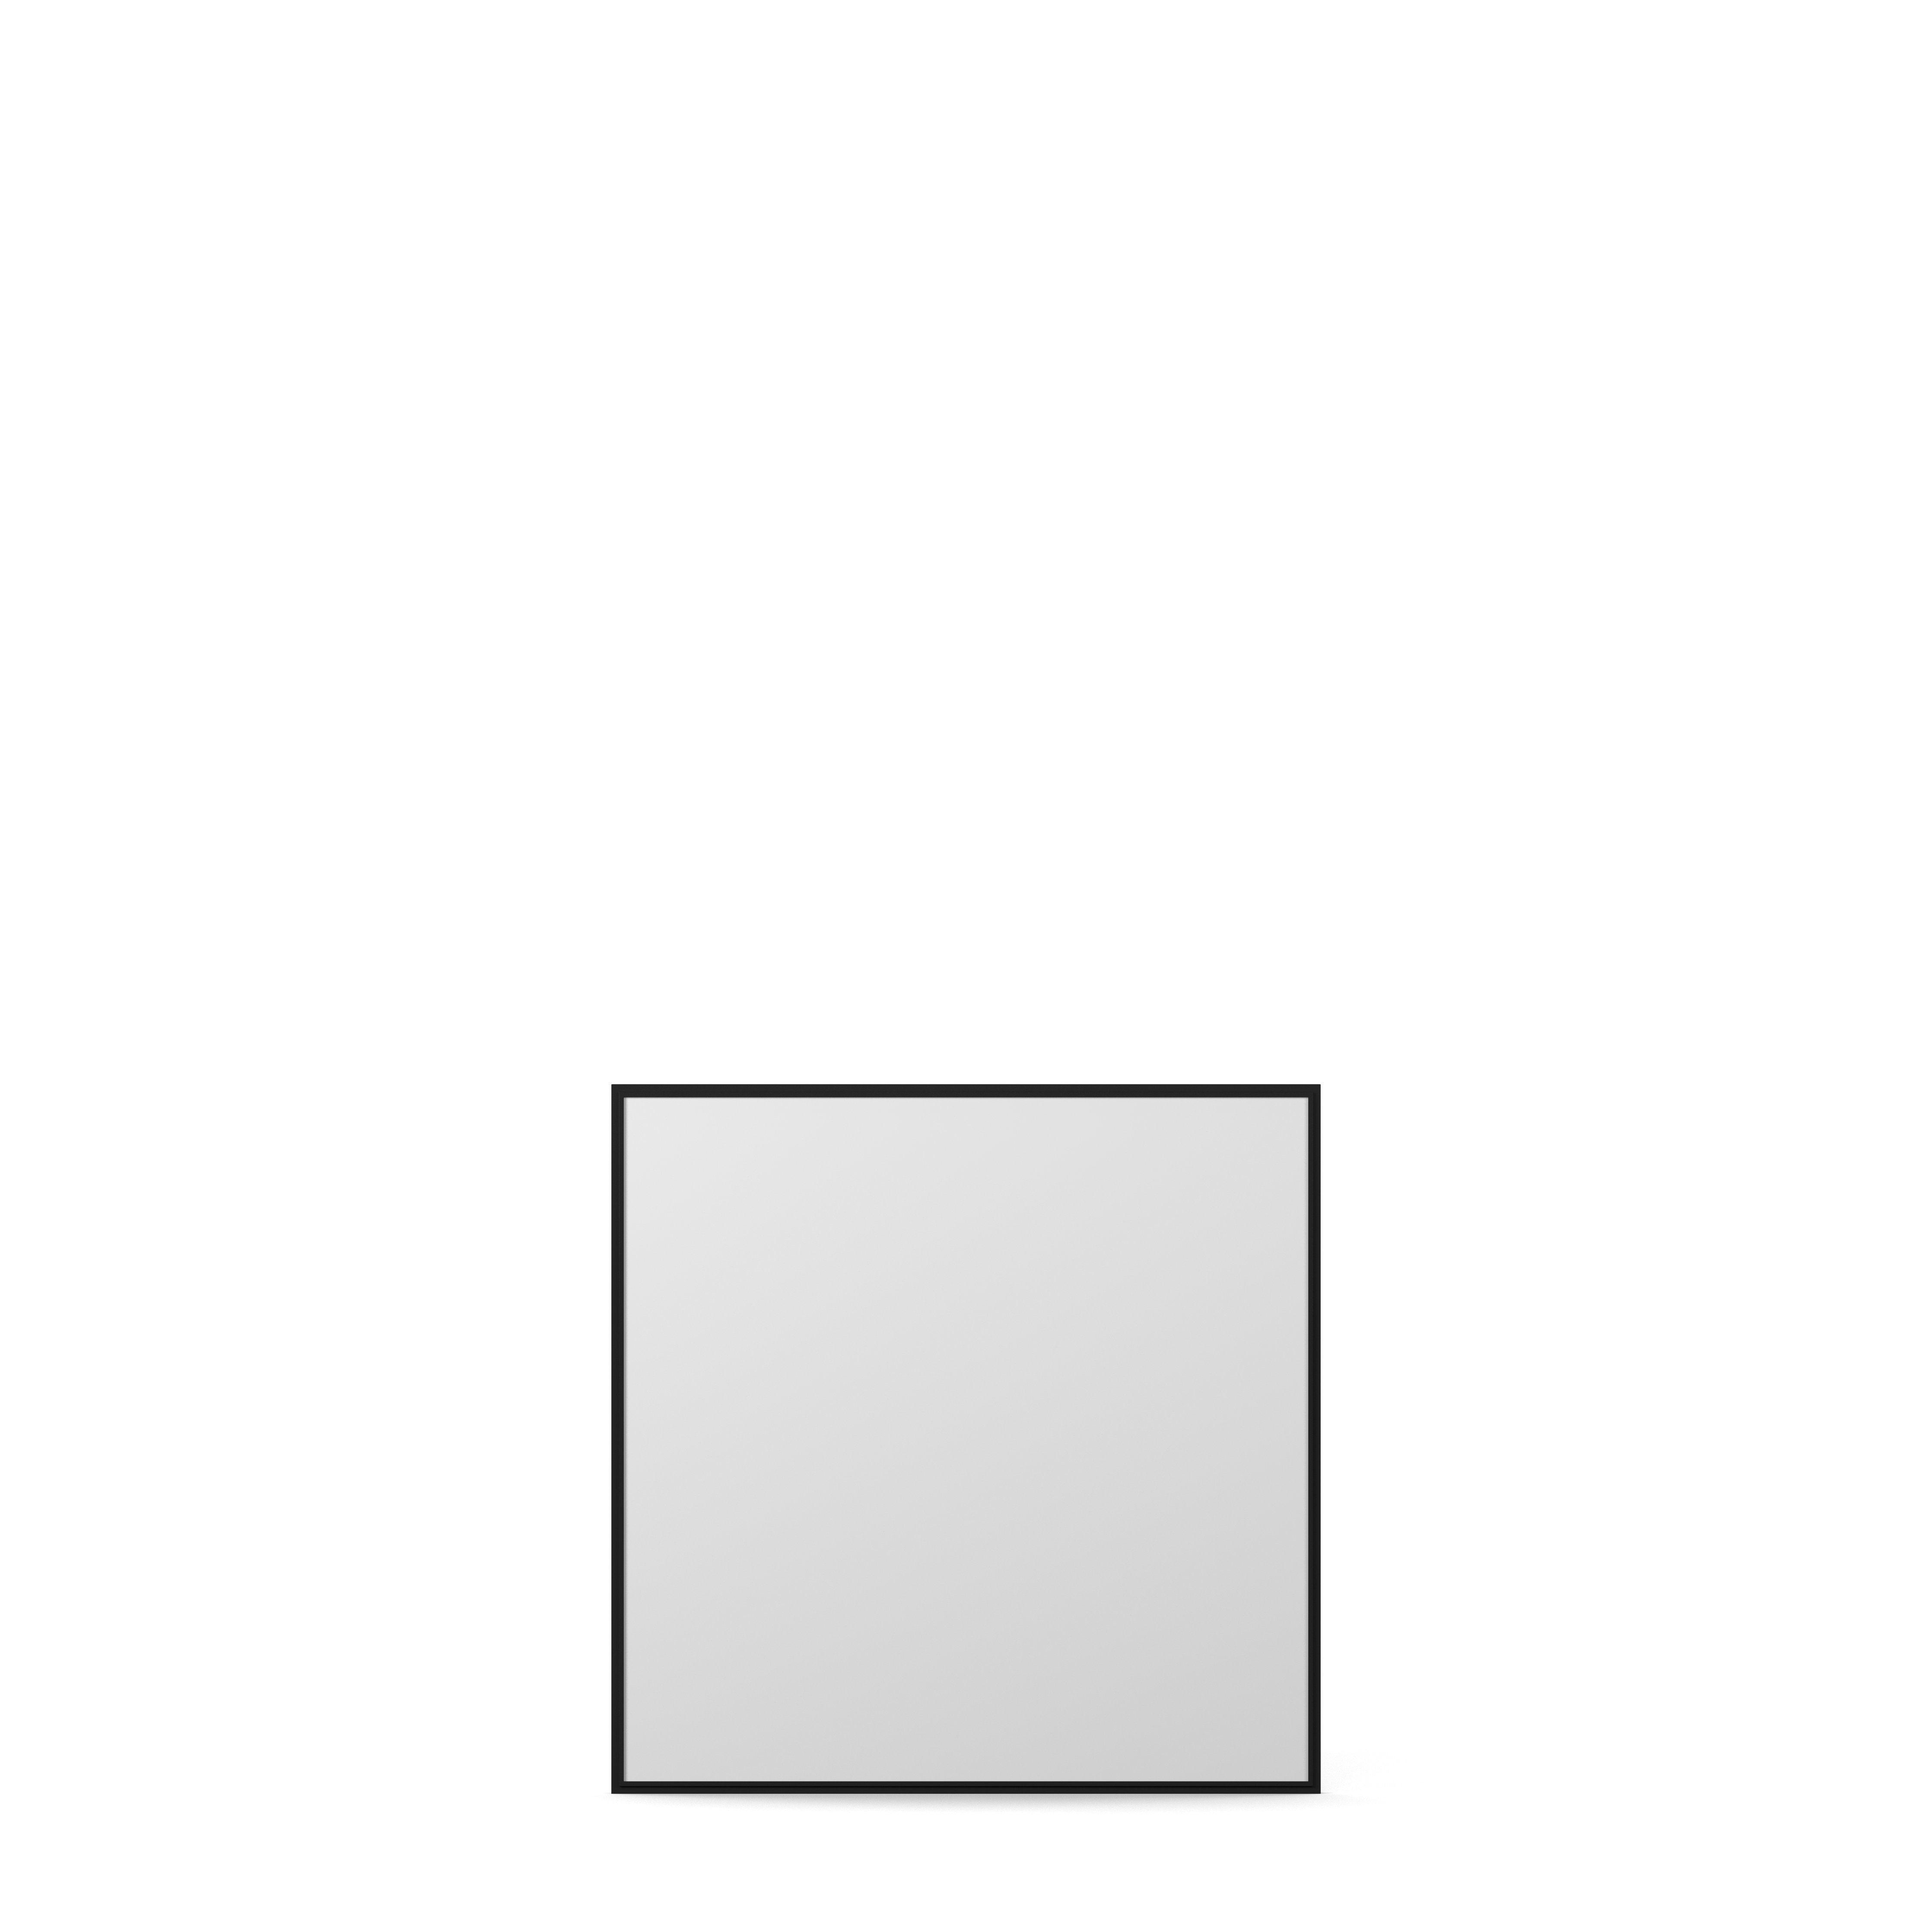 Englesson Speglar Edge Black Cube Spegel Kvadratisk 830ES #färg_Edge Black #Colour_Edge Black